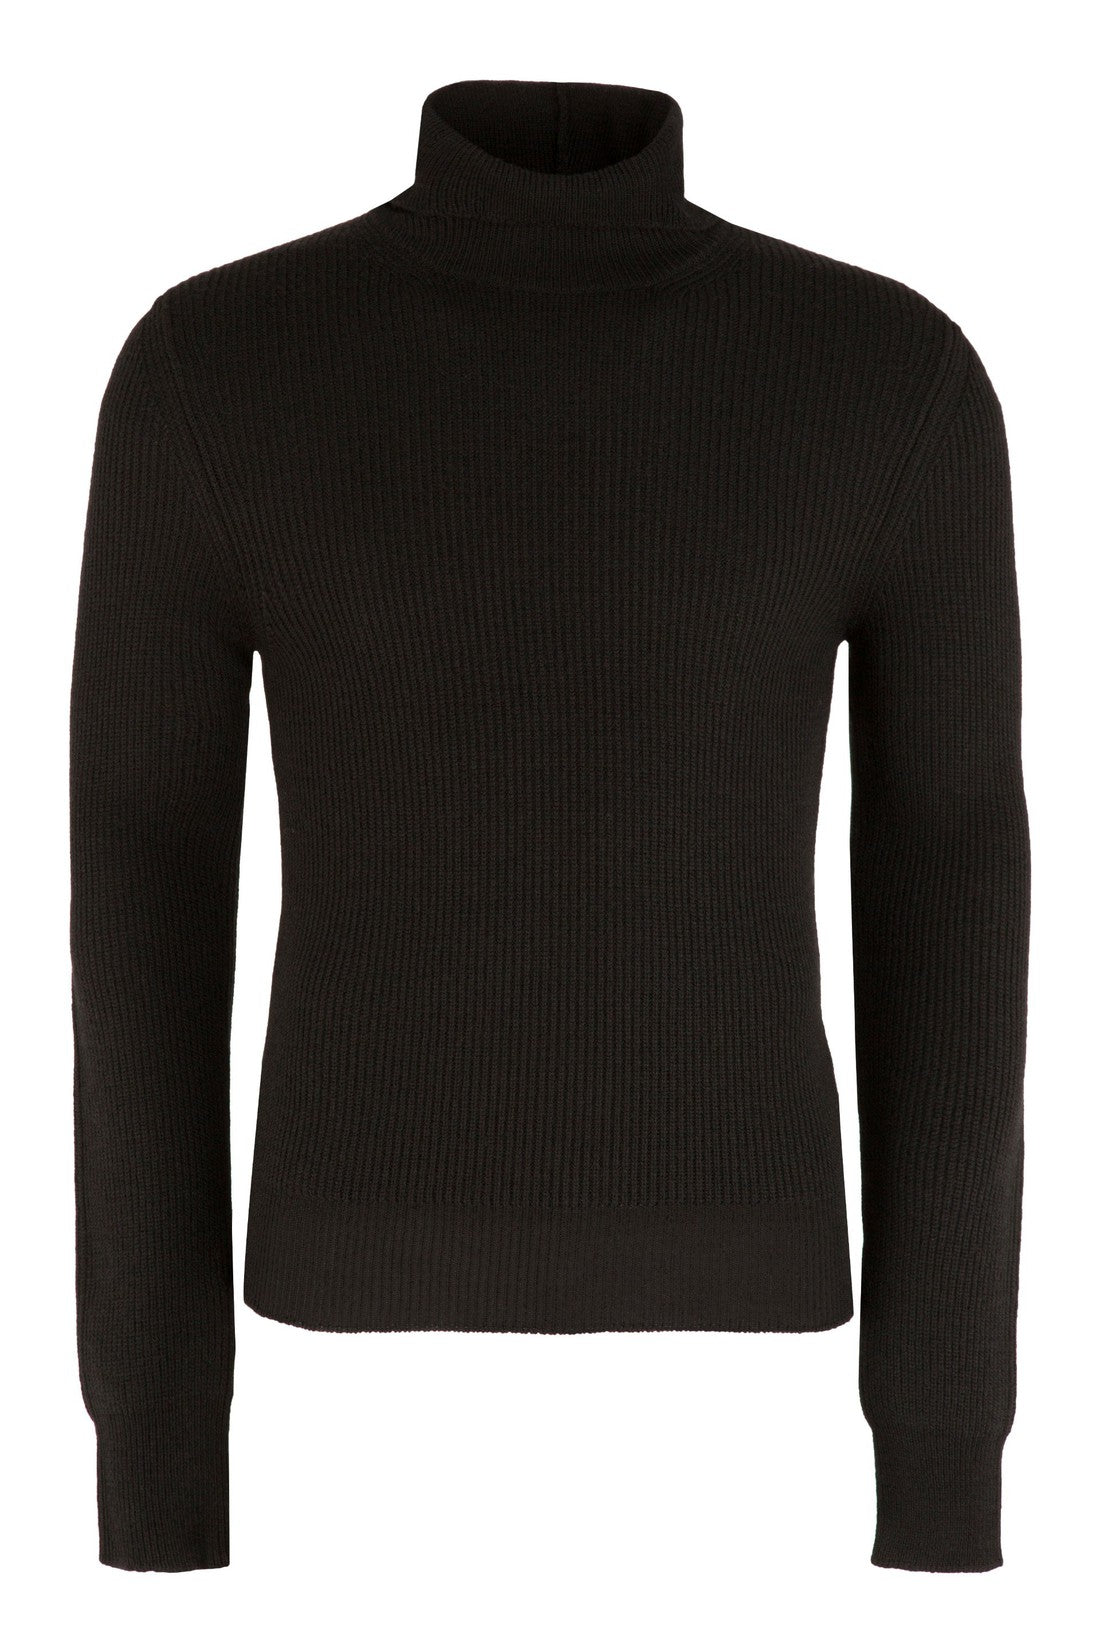 FERRAGAMO-OUTLET-SALE-Wool turtleneck sweater-ARCHIVIST